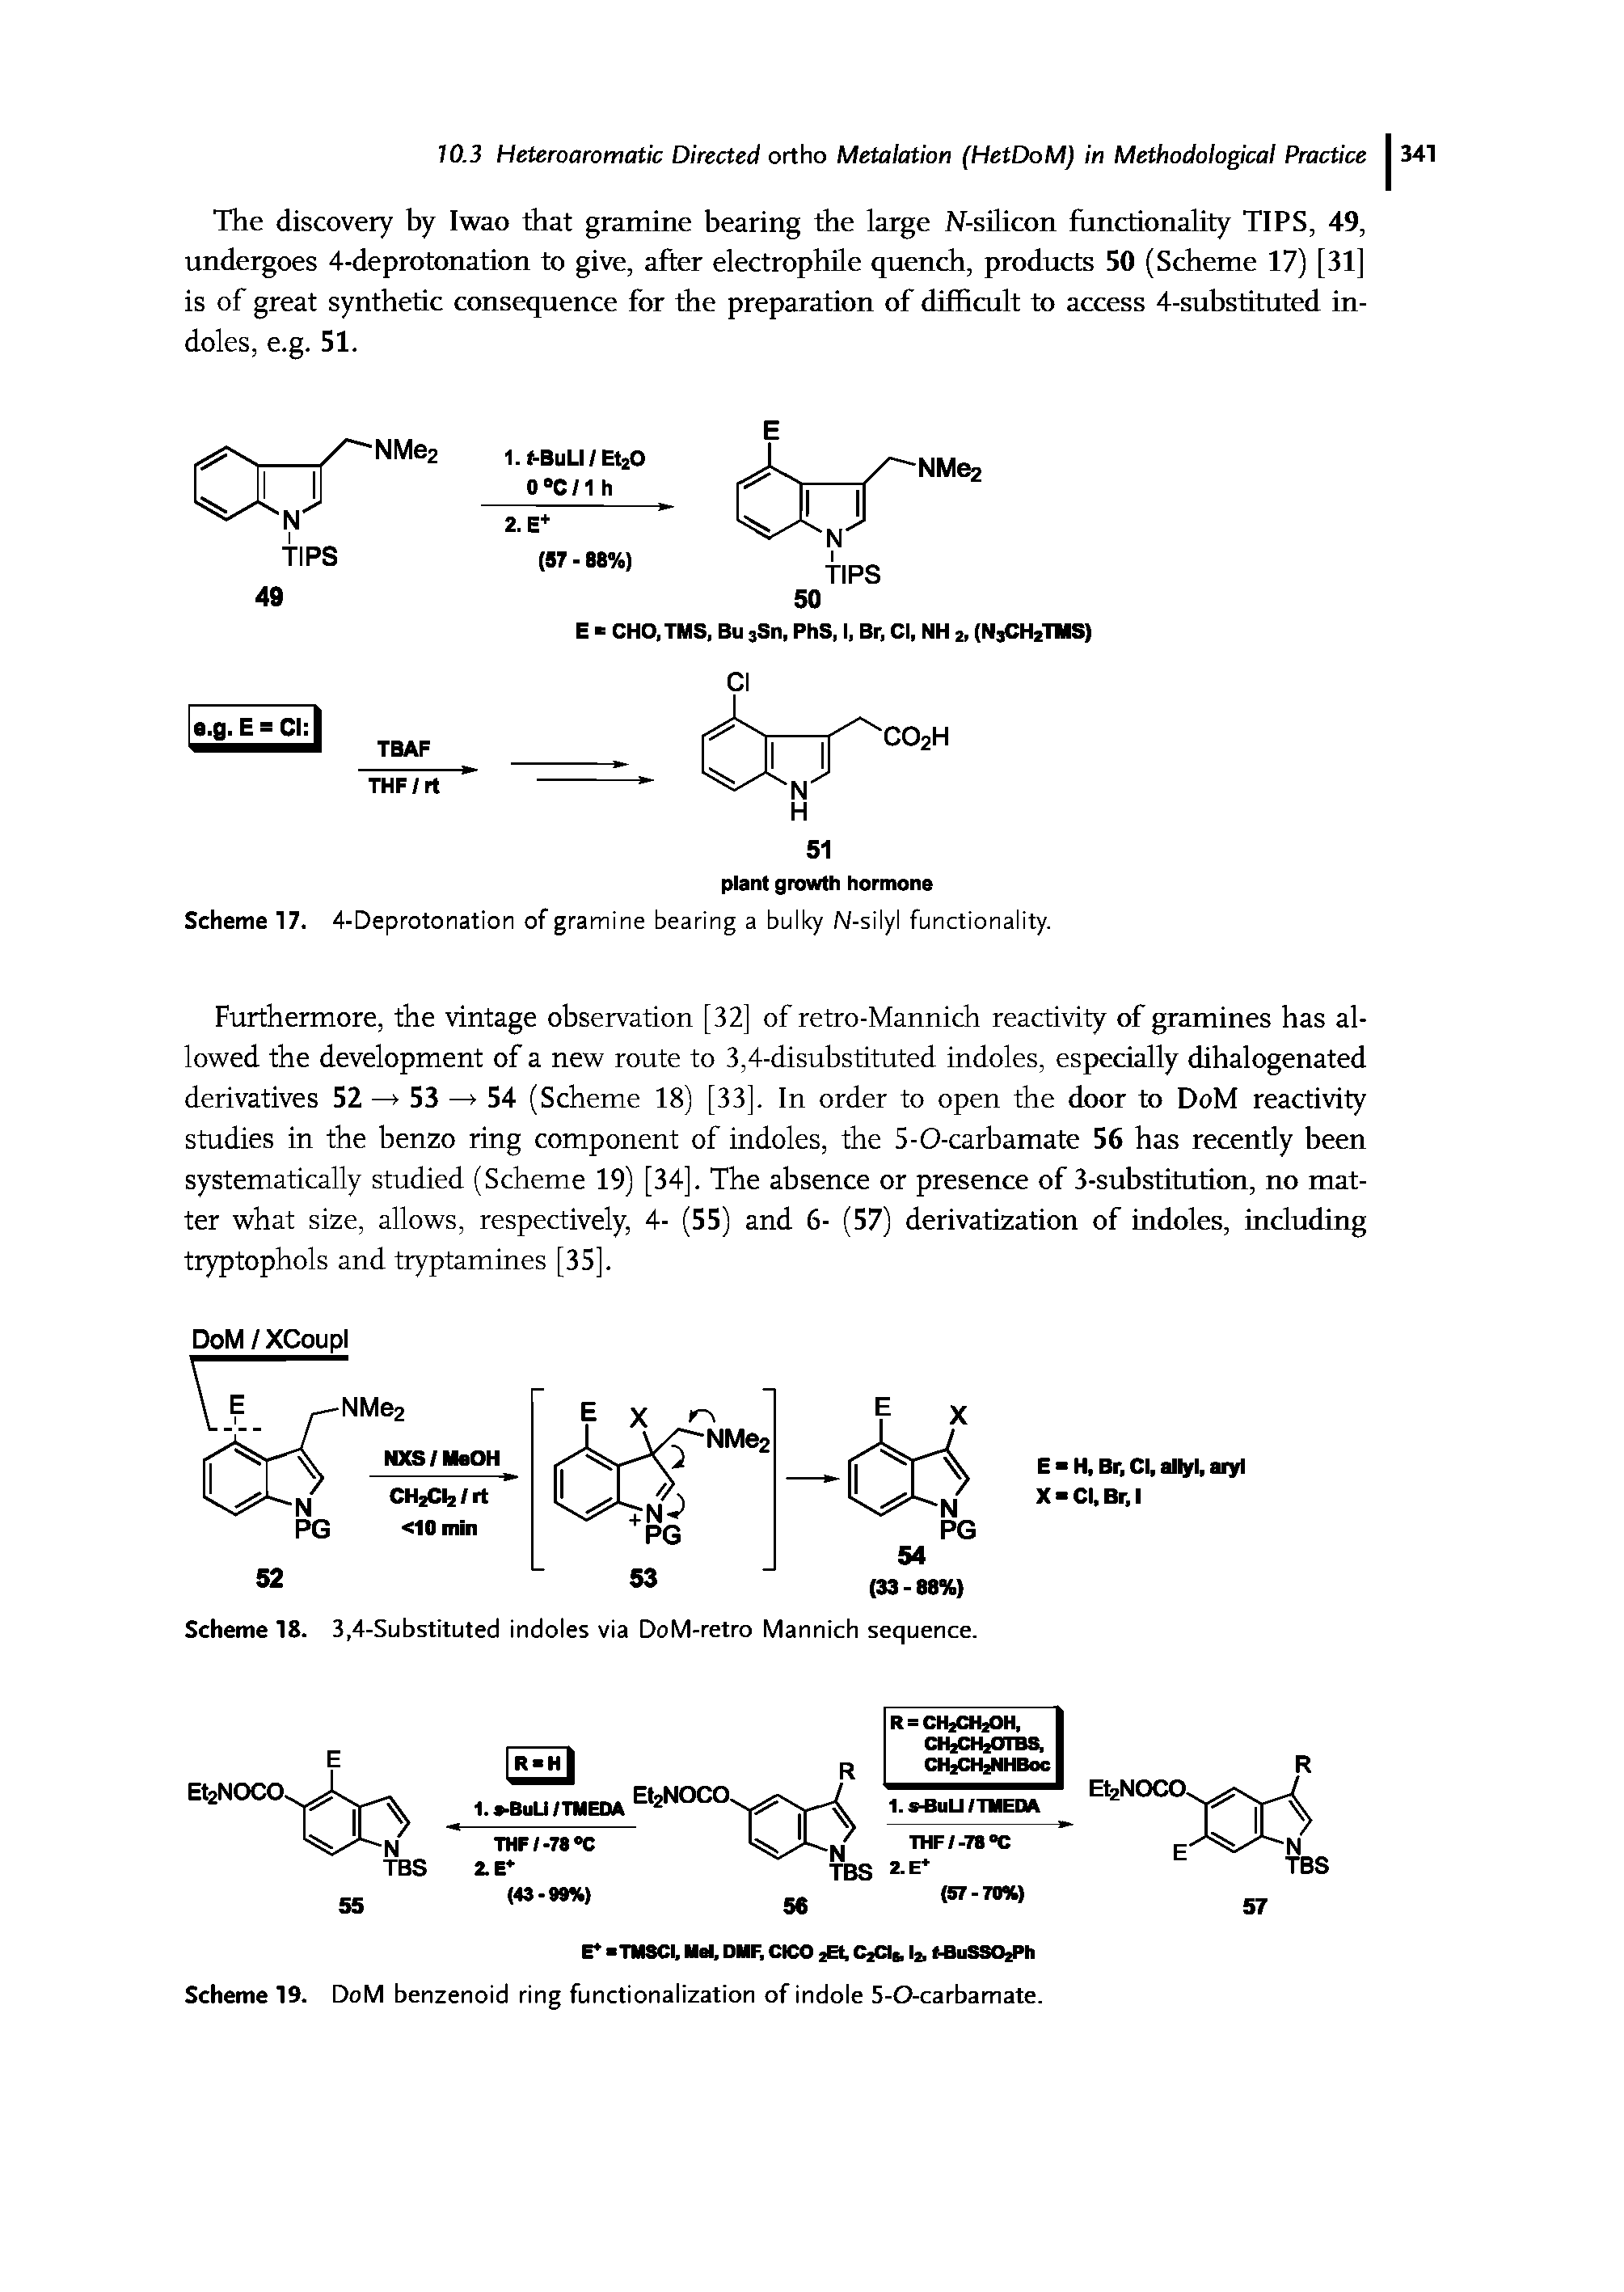 Scheme 19. DoM benzenoid ring functionalization of indole 5-O-carbamate.